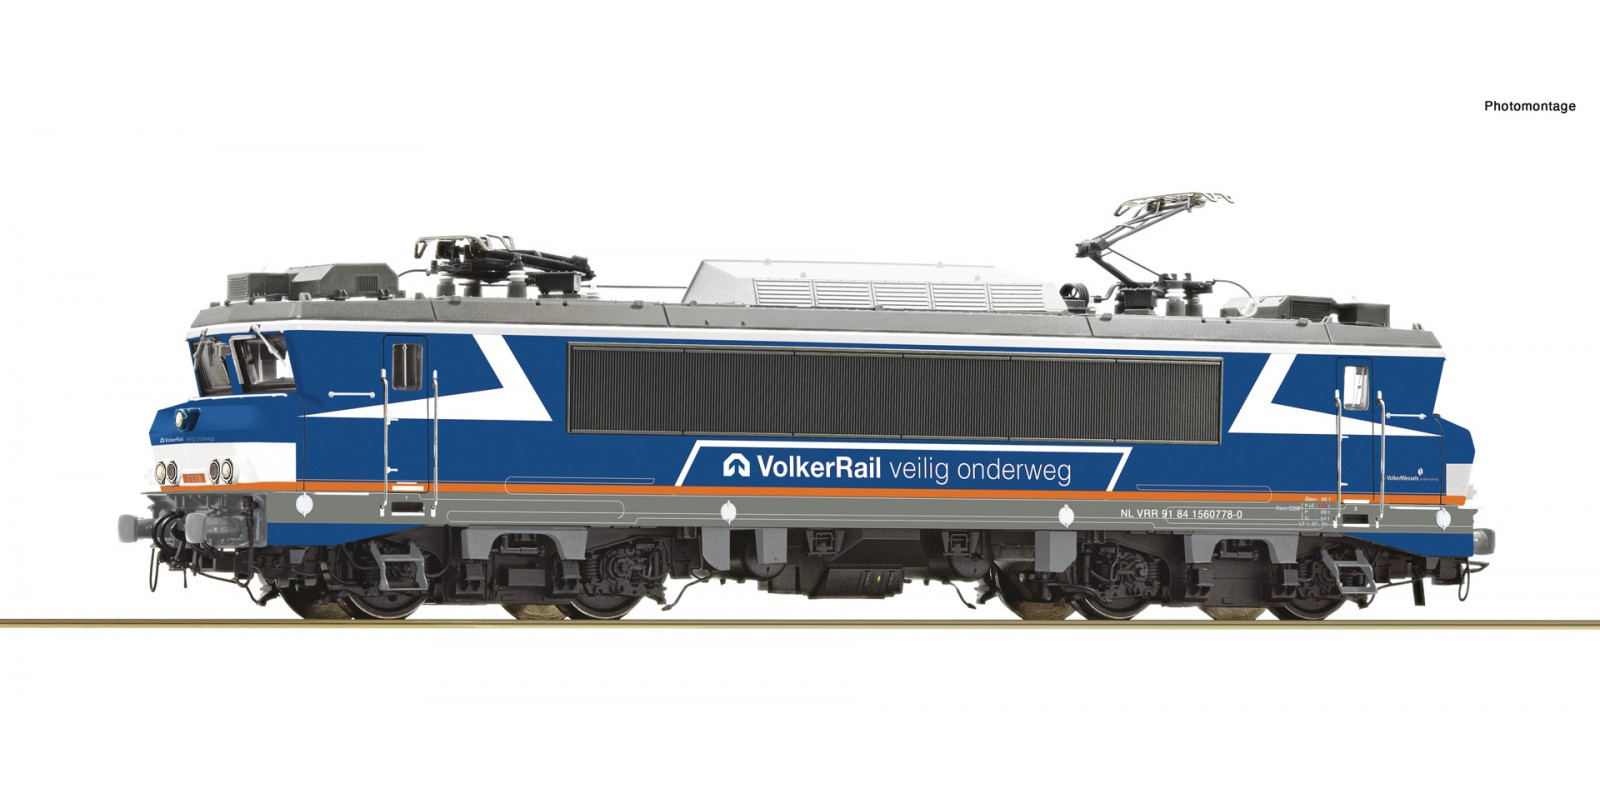 RO7500010 Electric locomotive 7178, VolkerRail